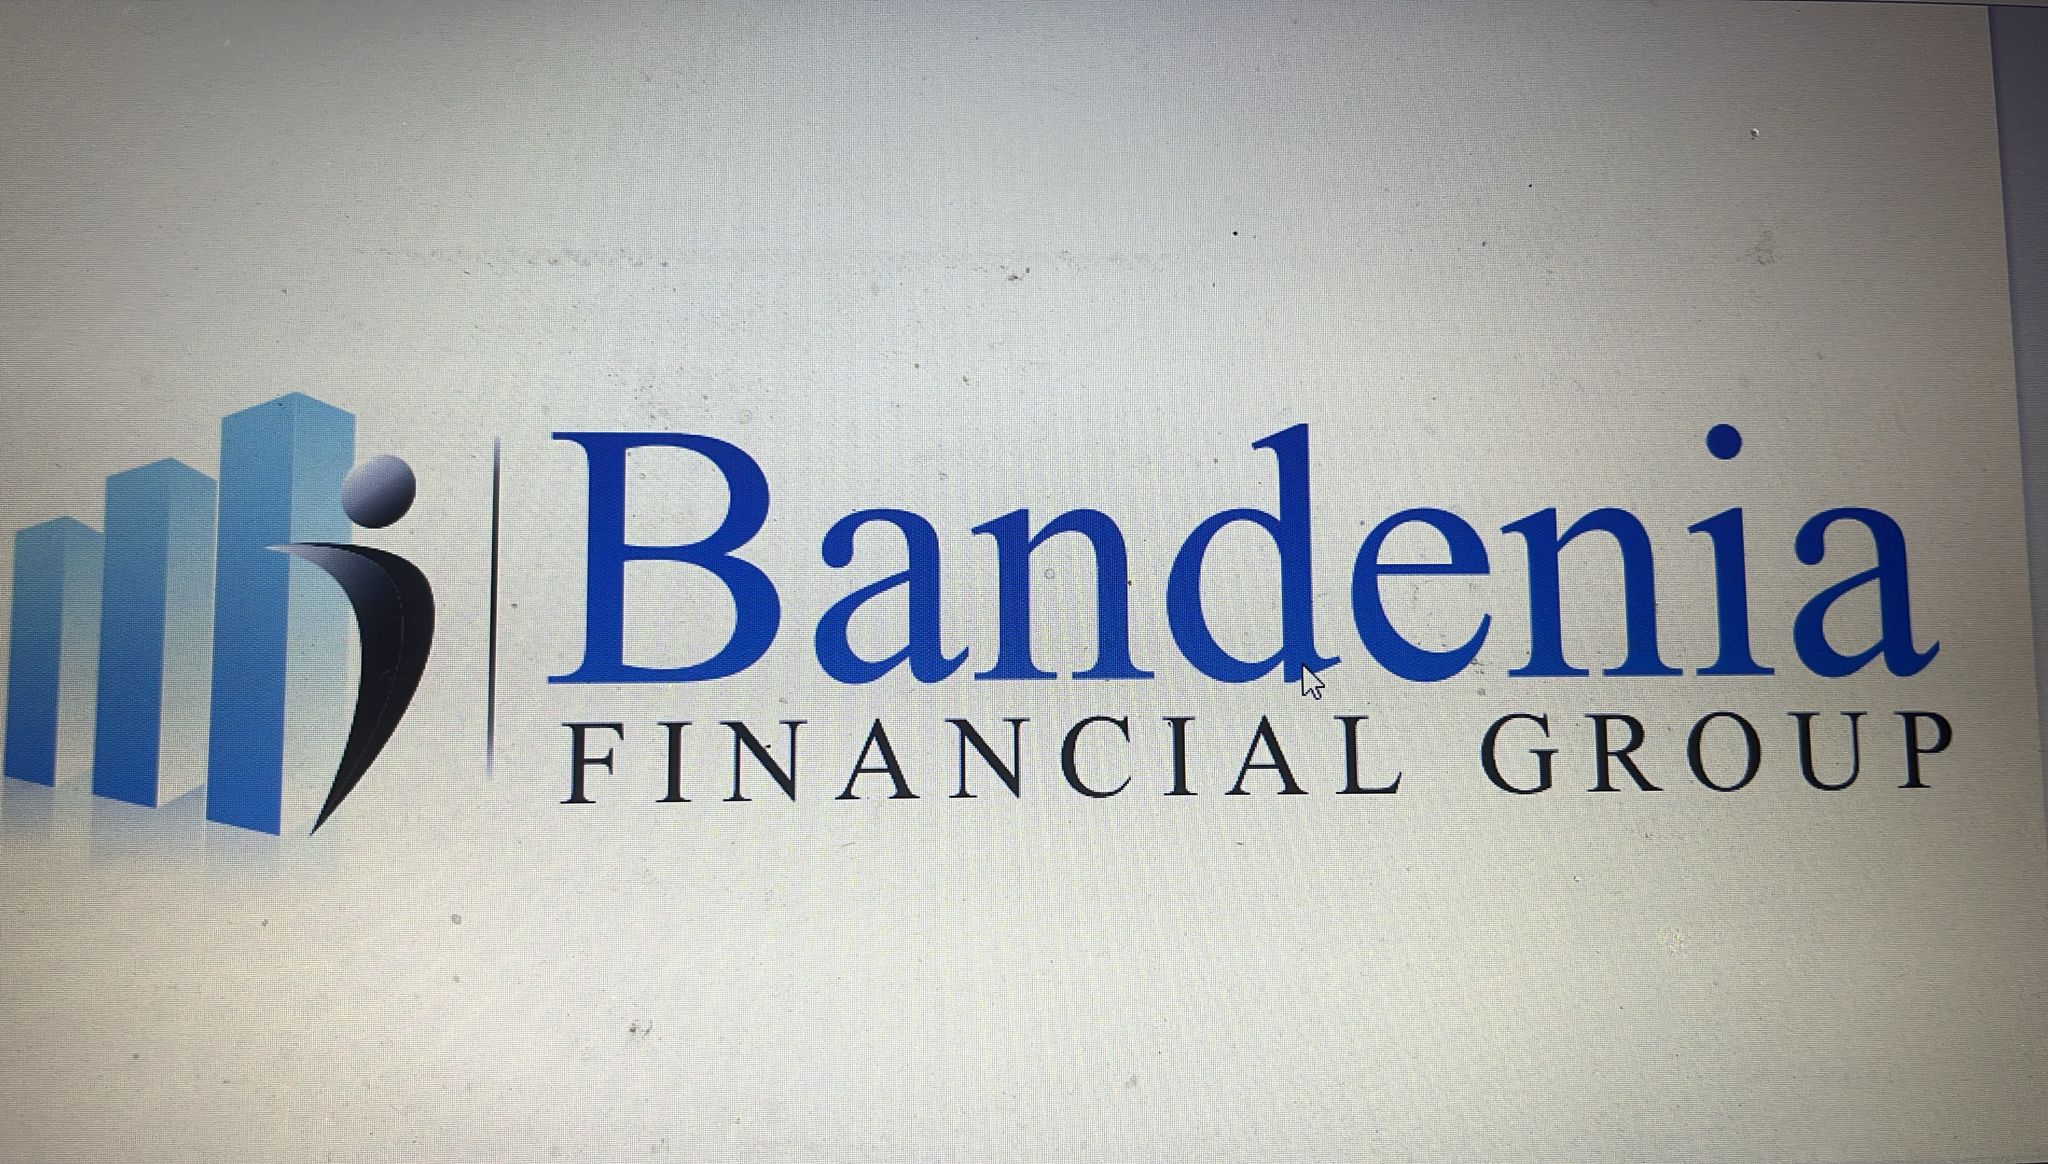 Bandenia financial group